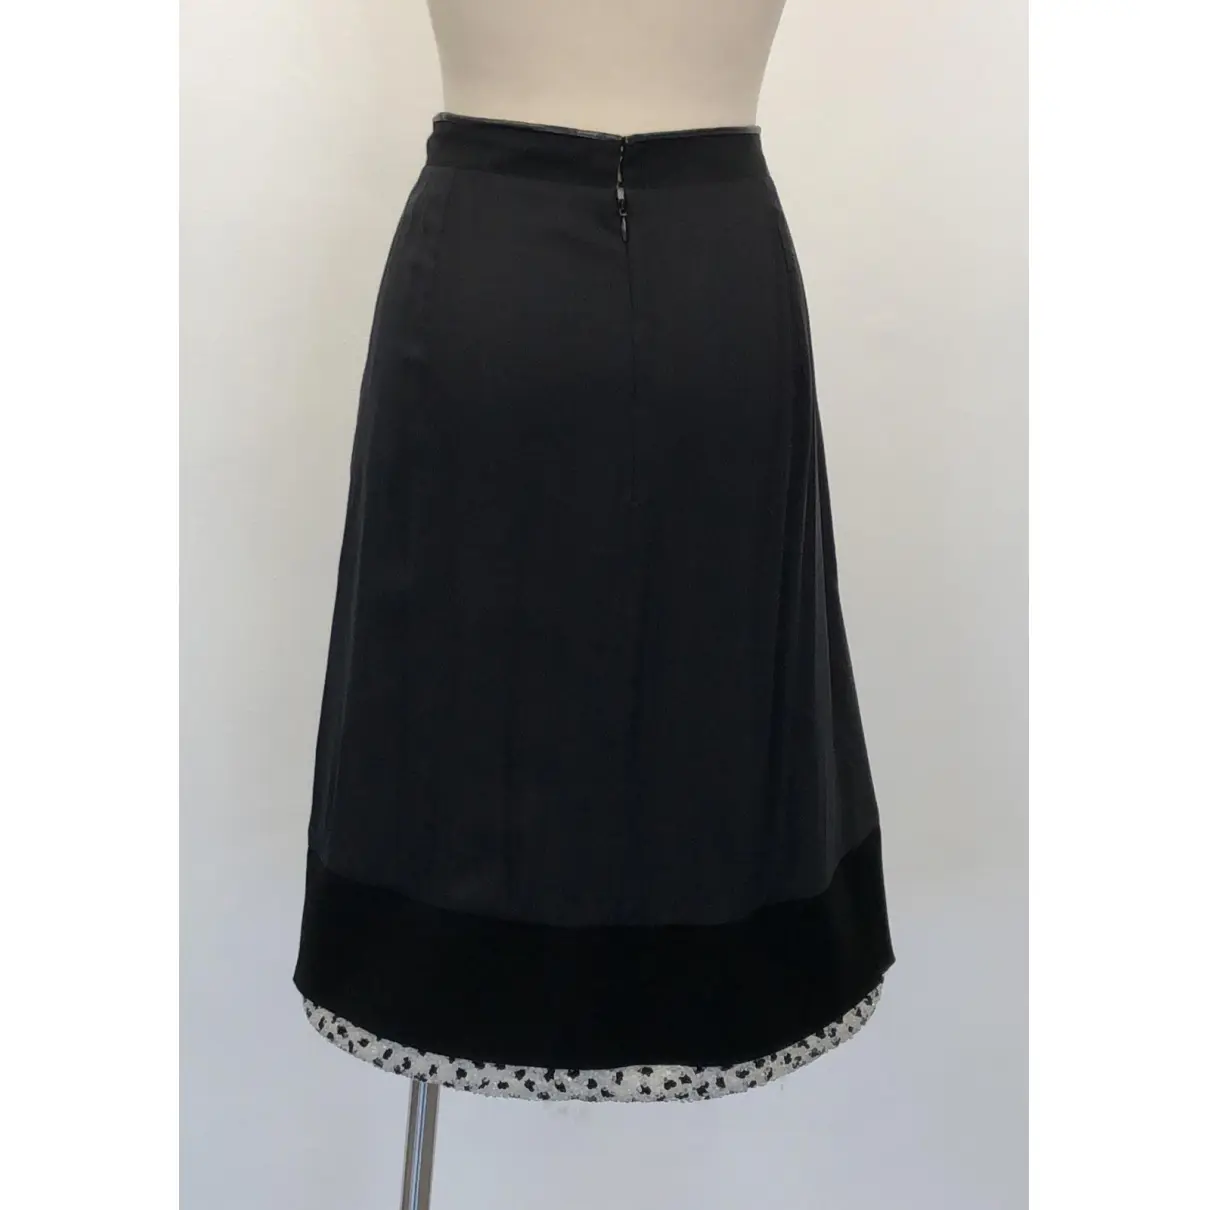 Buy Balenciaga Skirt online